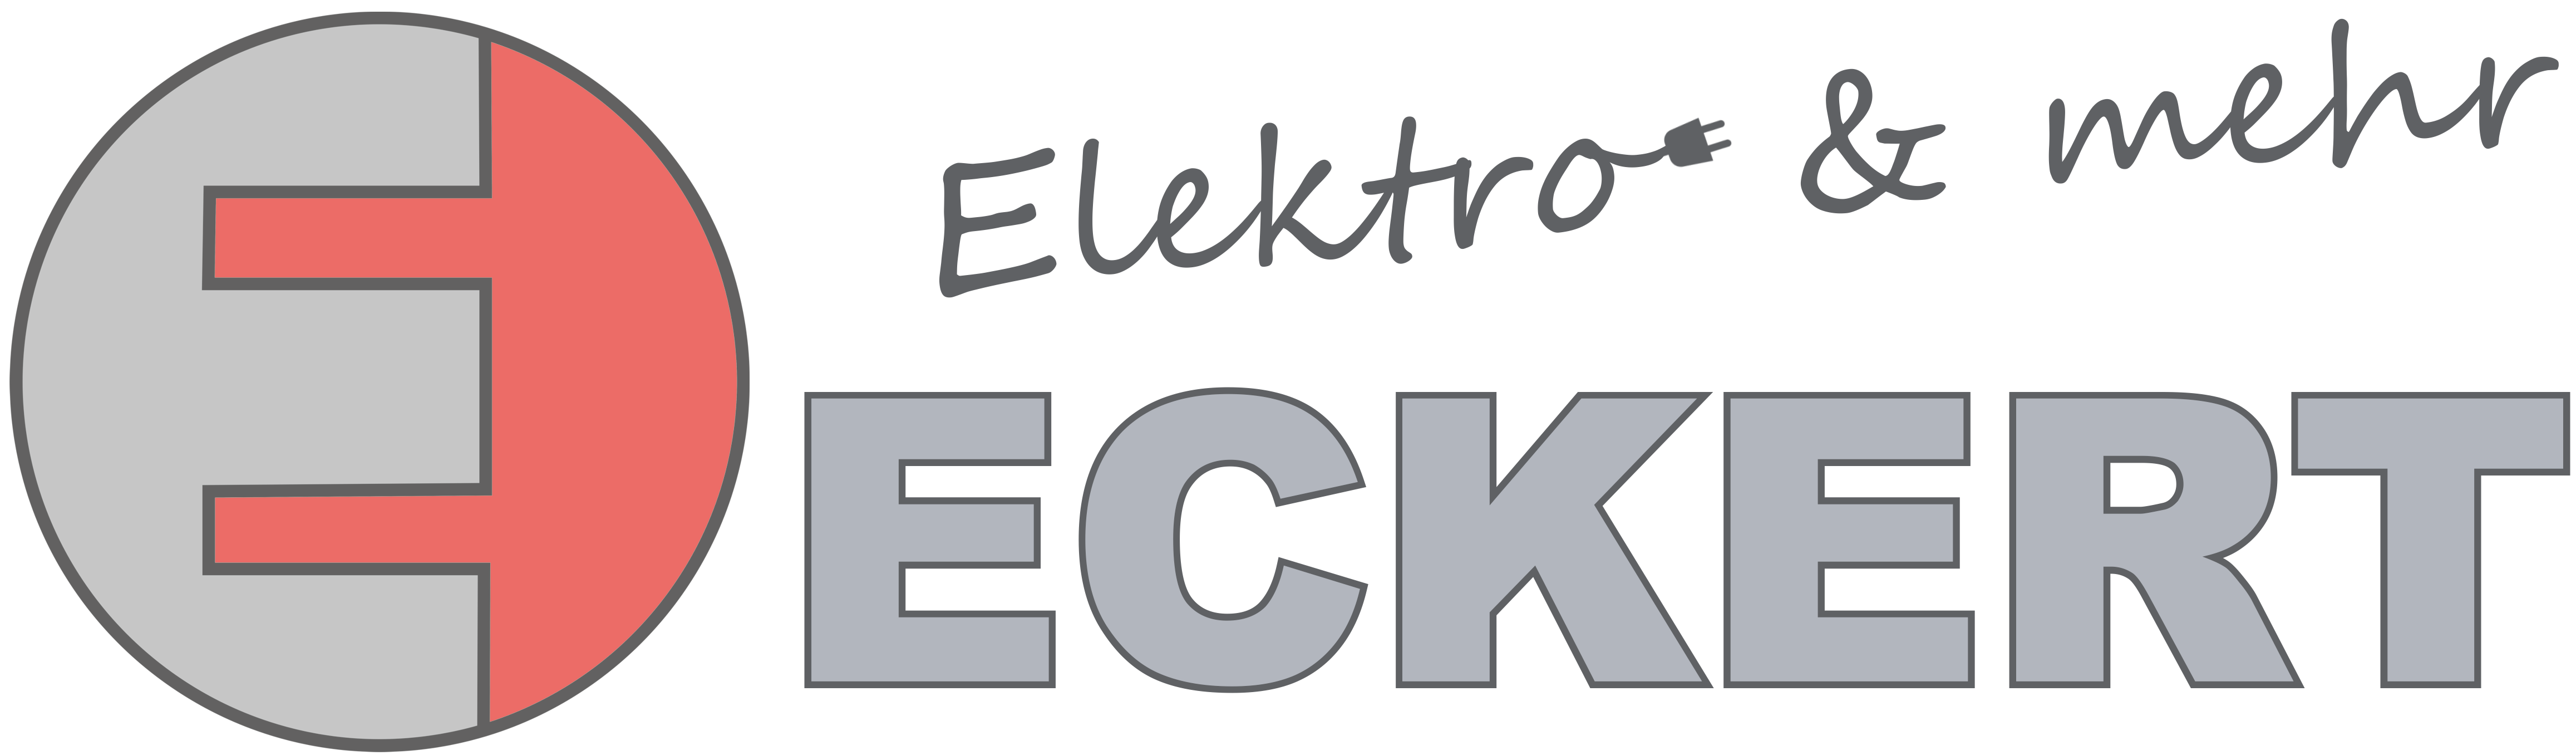 (c) Elektro-eckert.org